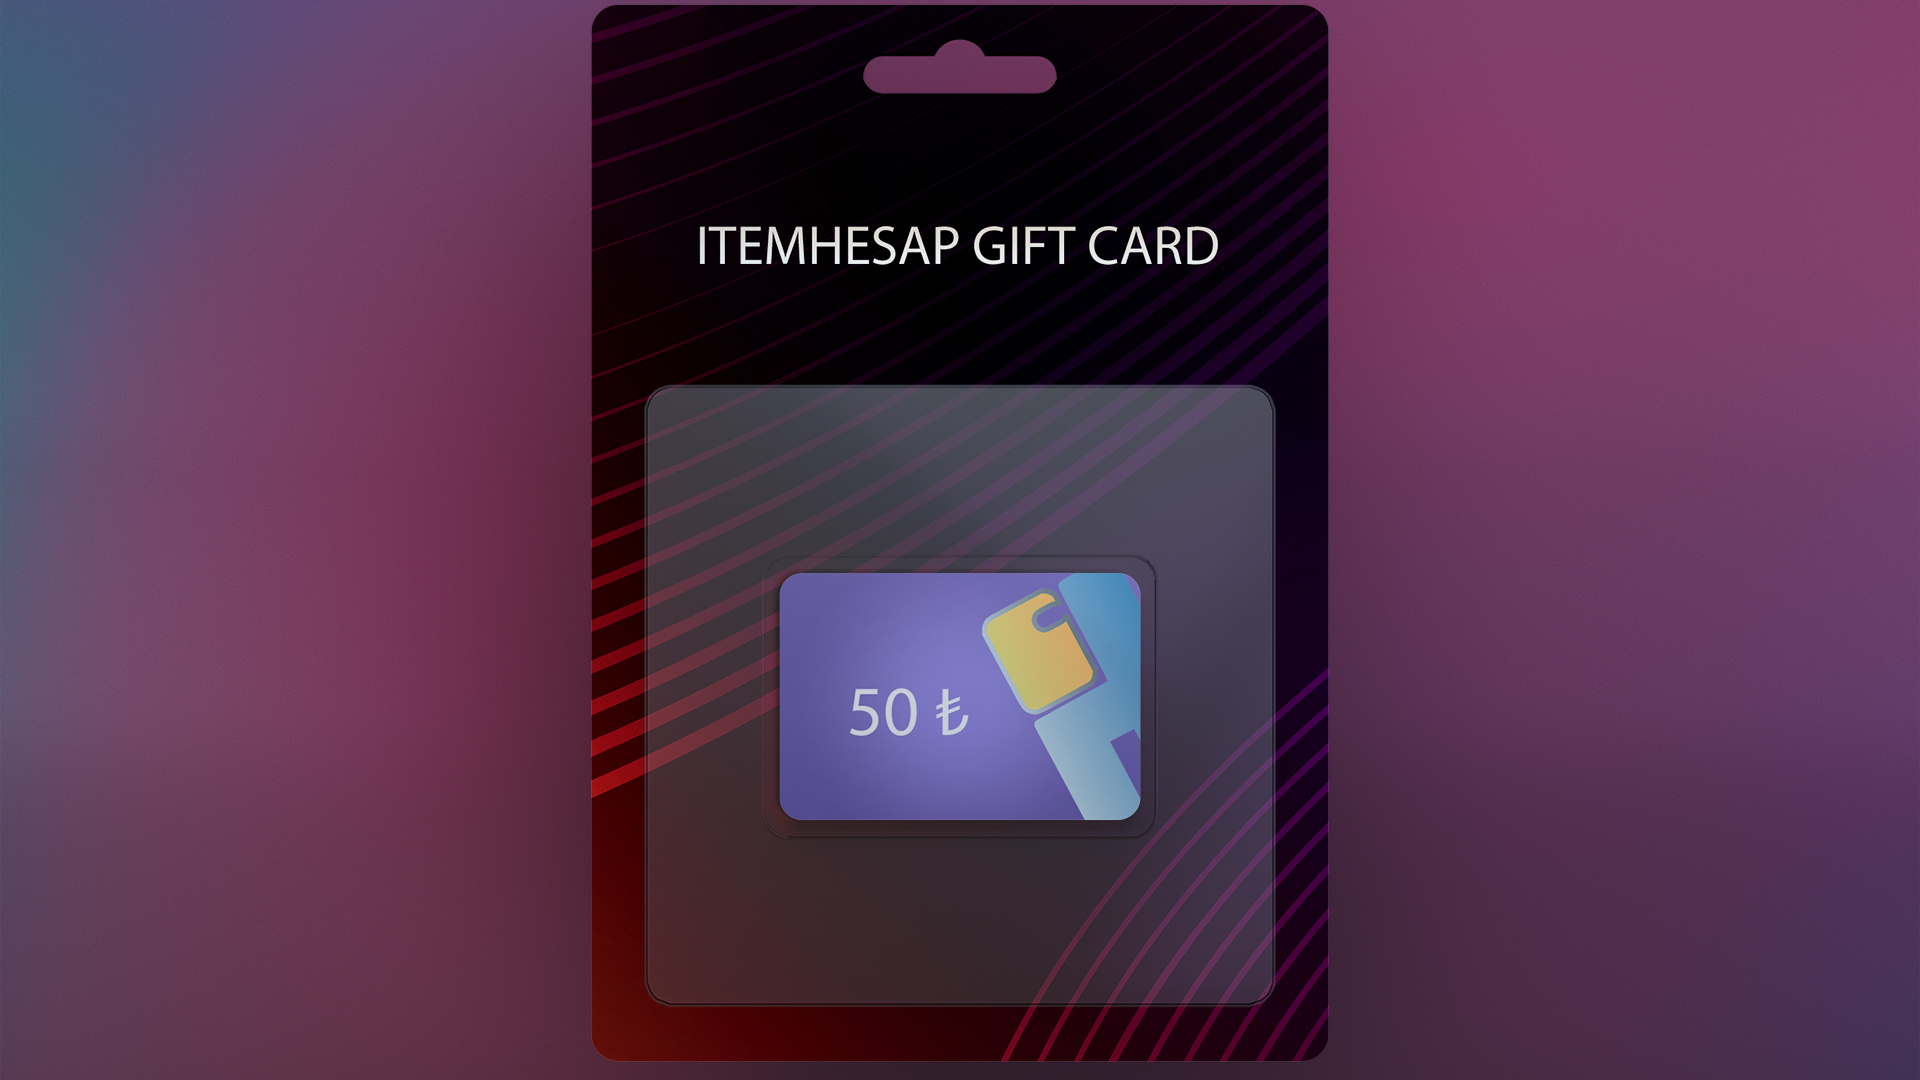 ItemHesap ₺50 Gift Card, $3.53